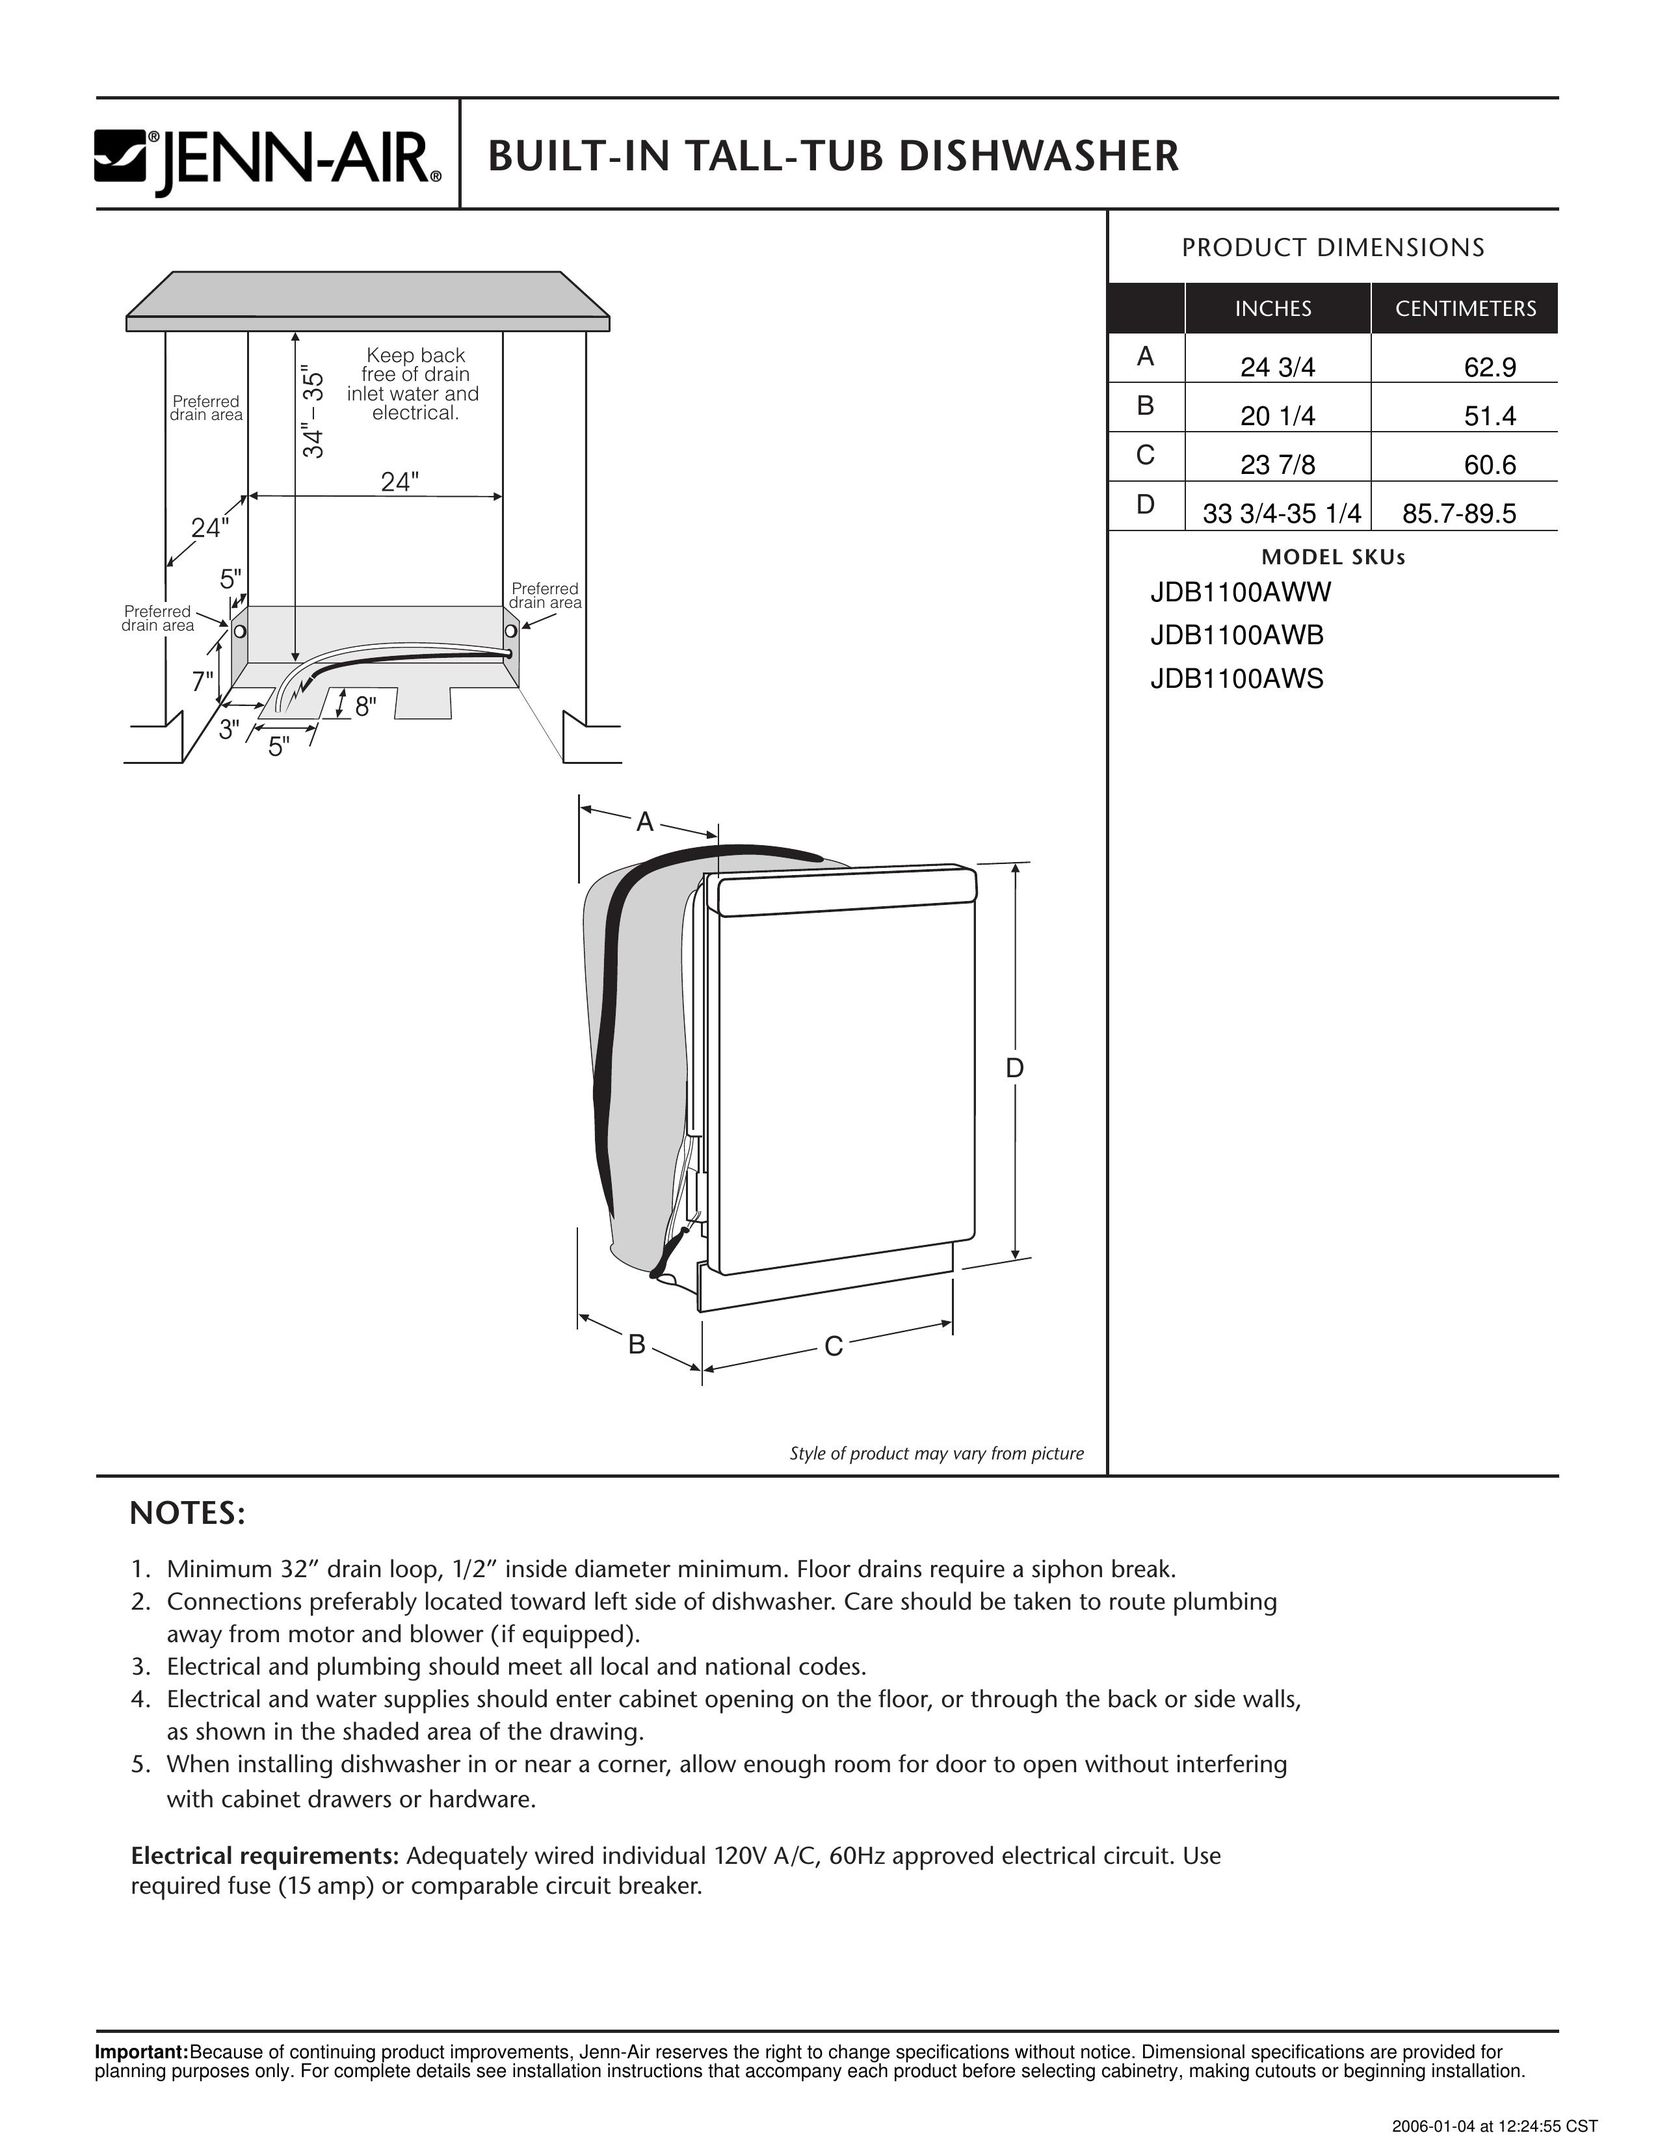 Jenn-Air JDB1100AWS Dishwasher User Manual